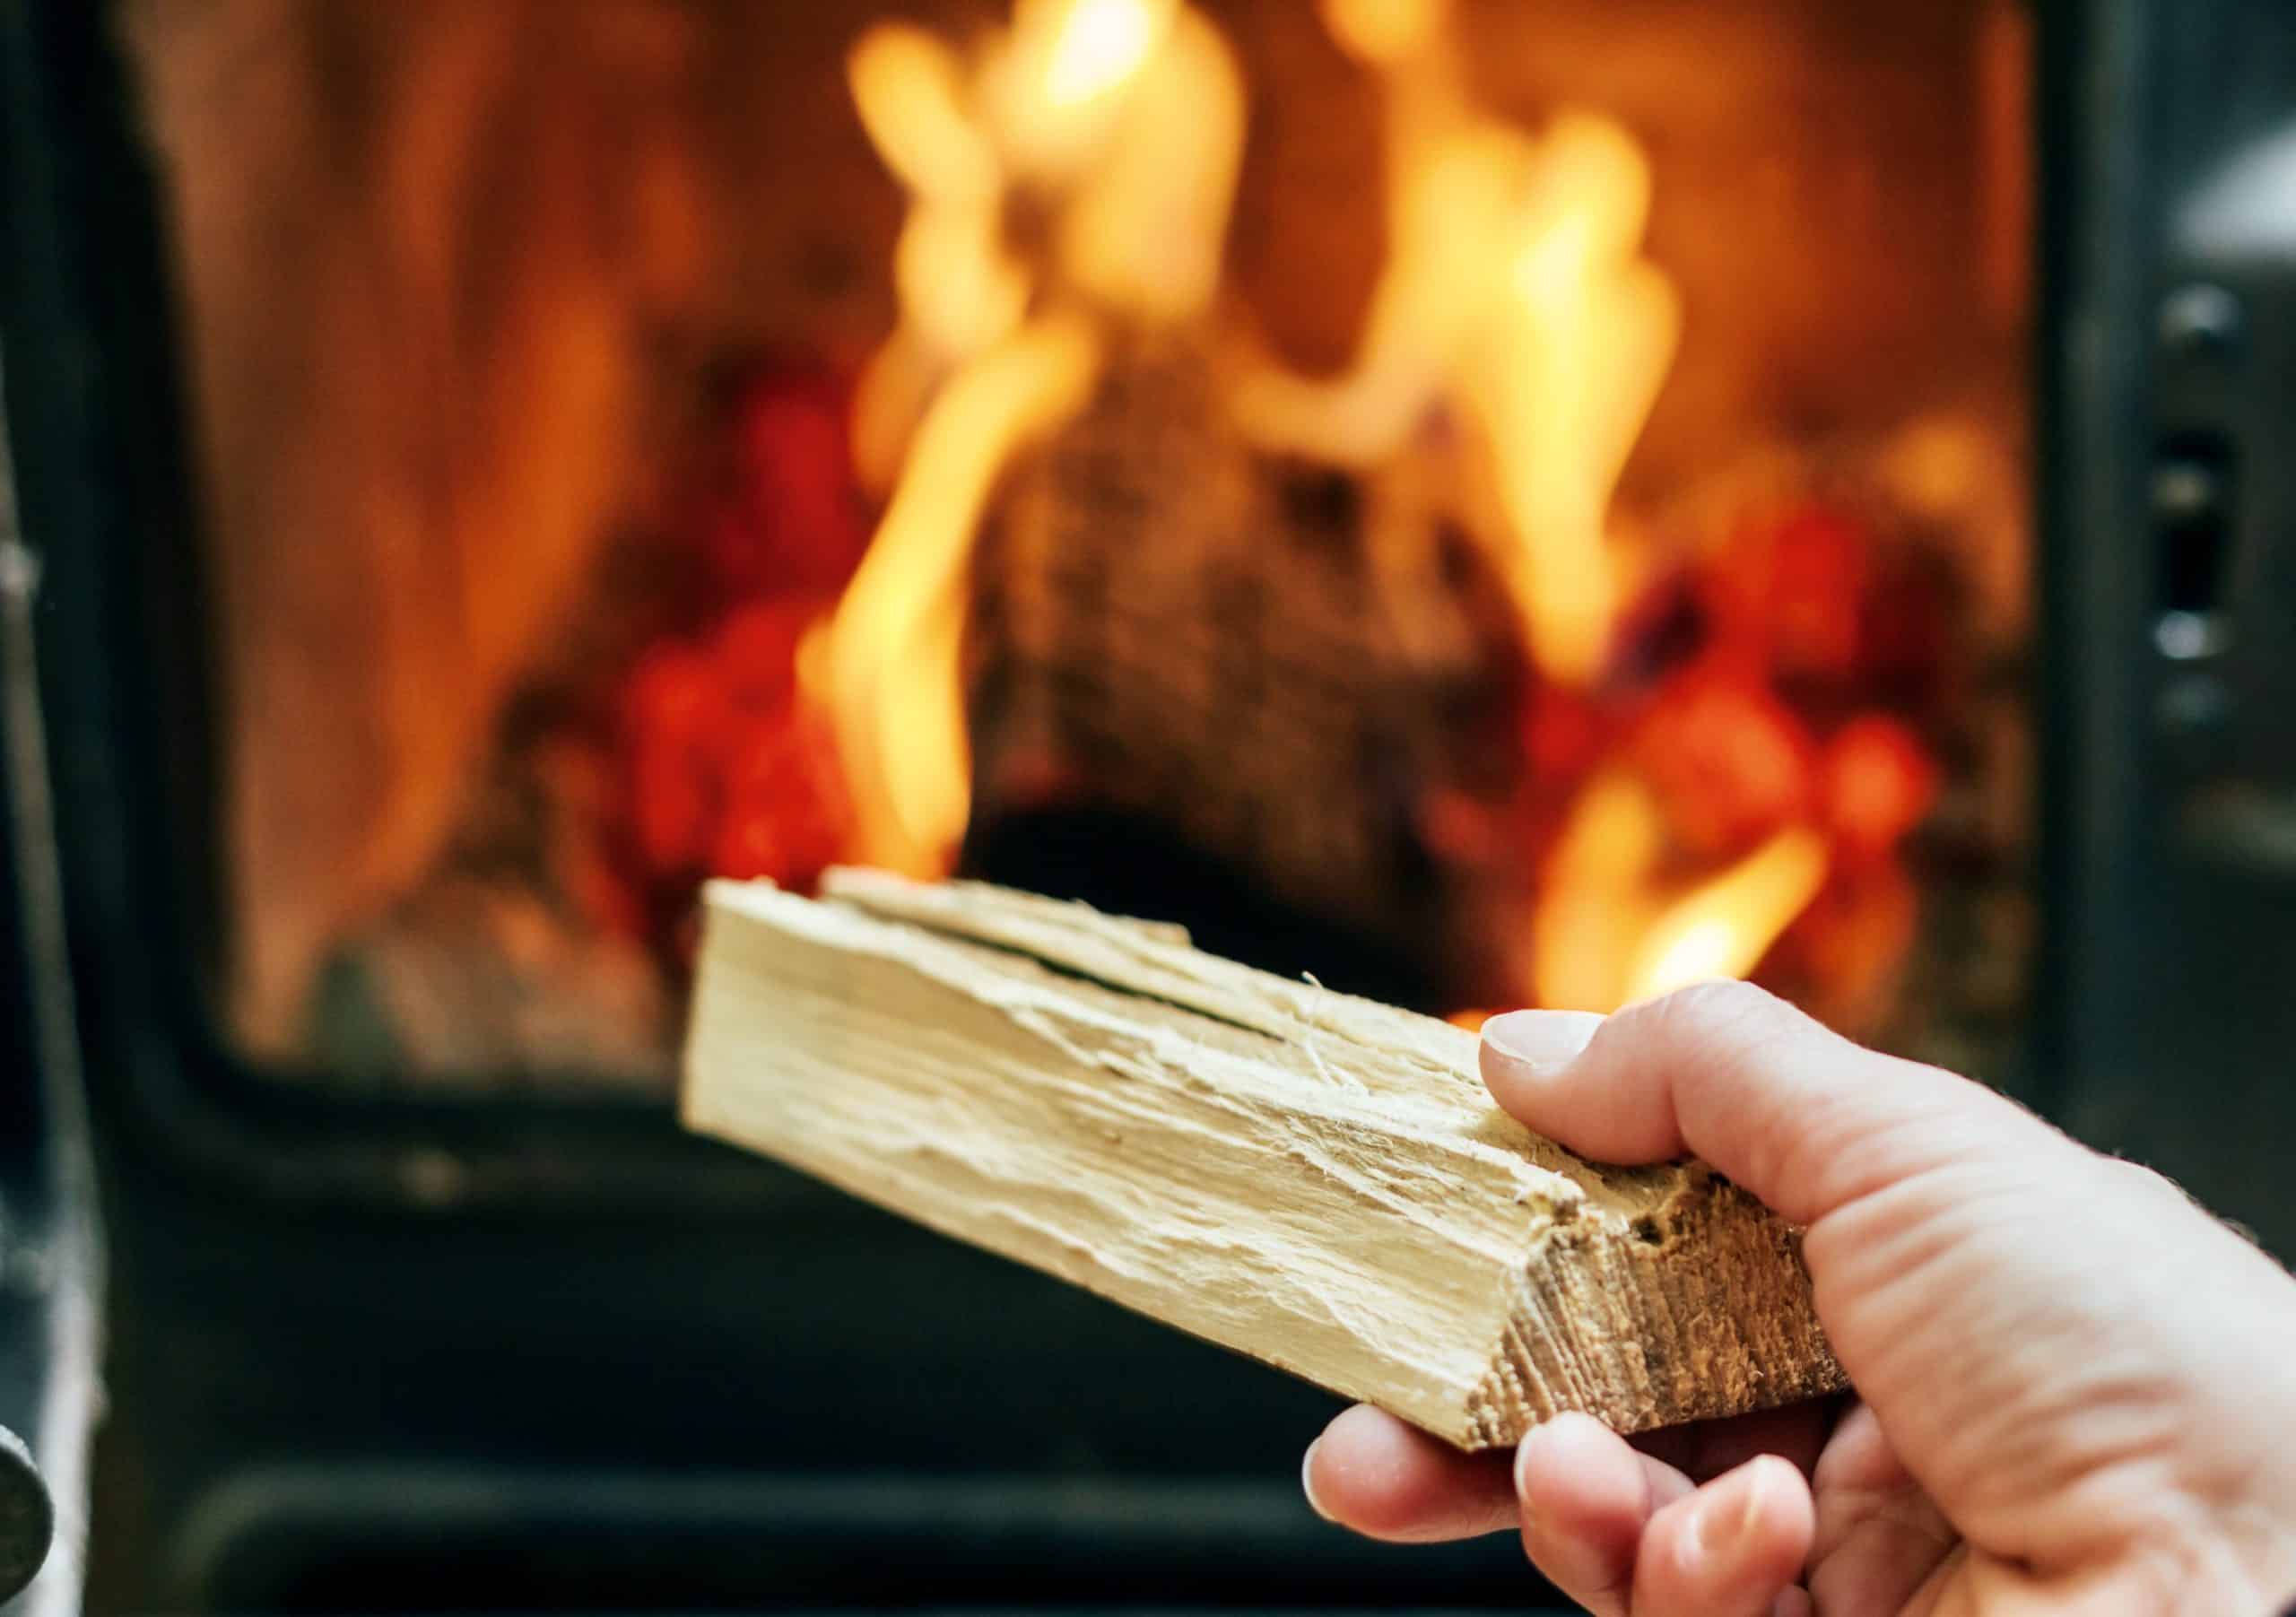 wood burner saving money on electric by using firewood